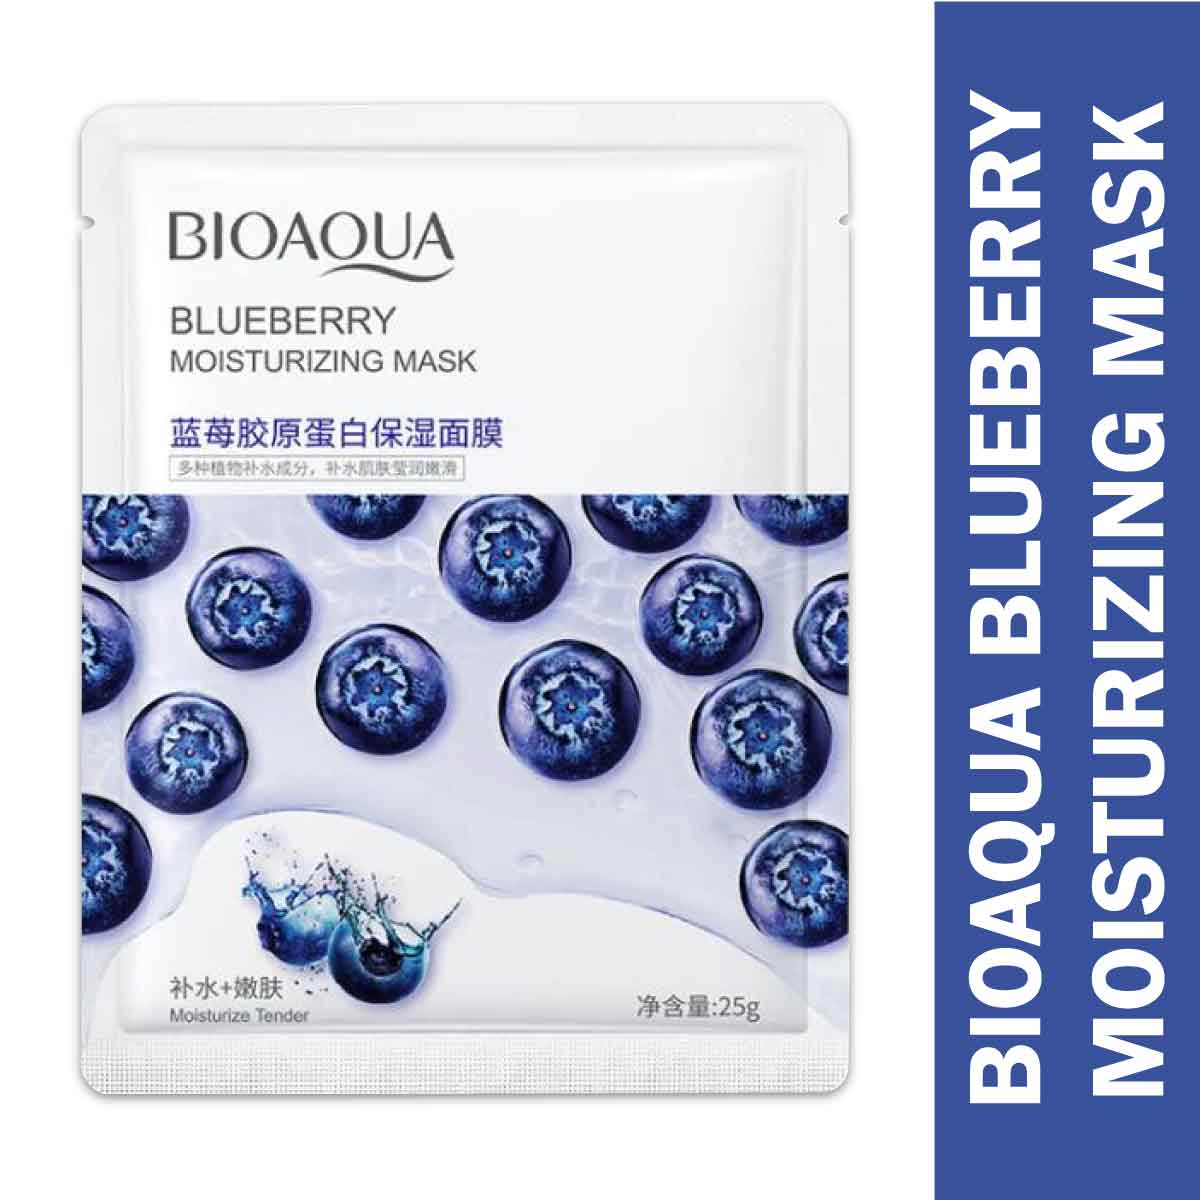 Bioaqua Blueberry Moisturizing Sheet Mask - 25G Blueberry Moisturizing Mask